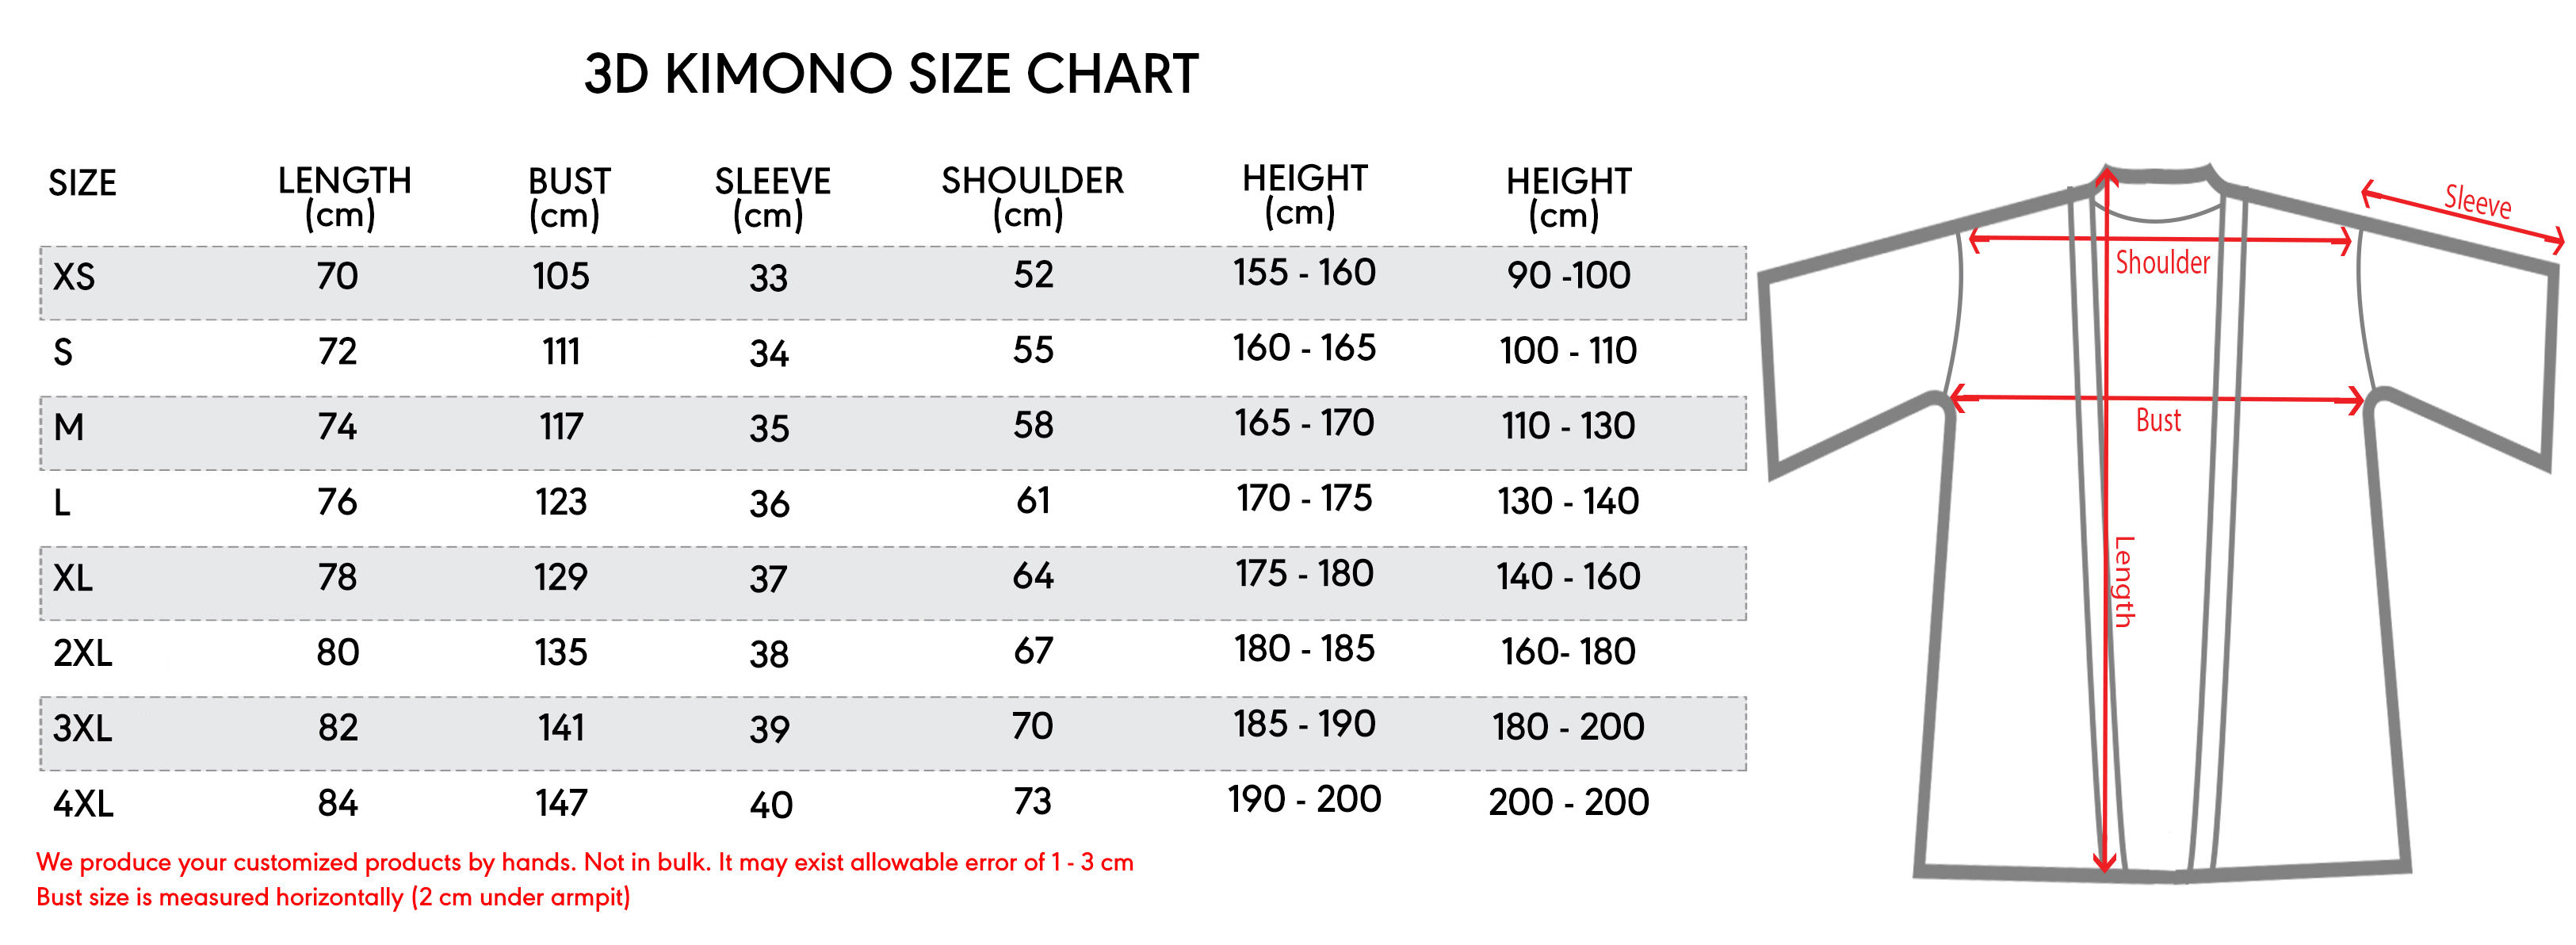 3D-Kimono-Size-Chart